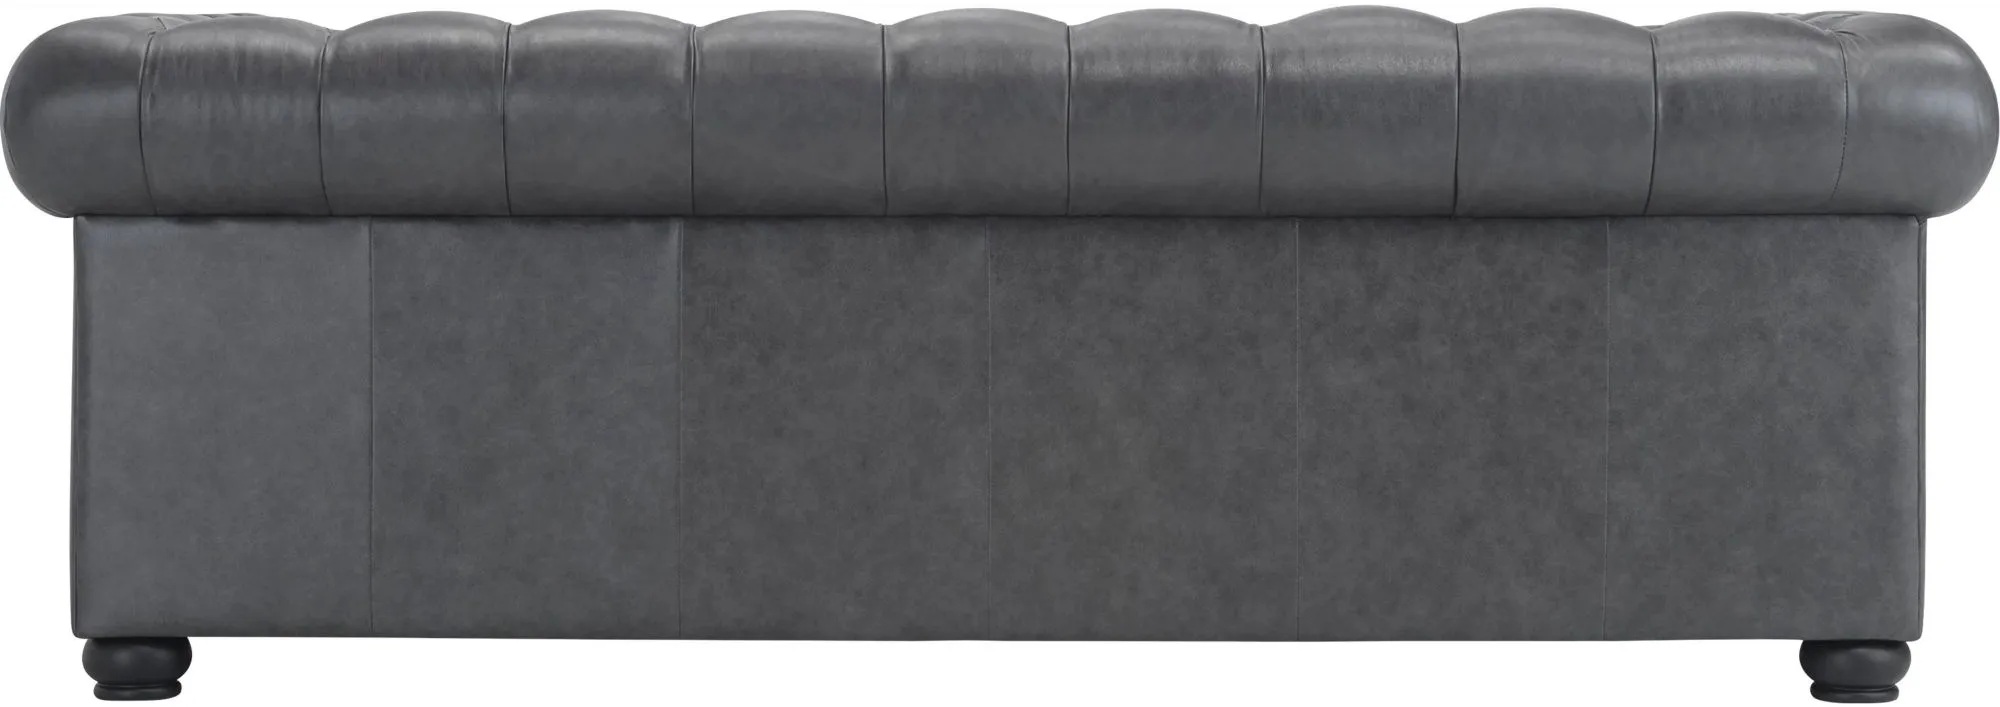 bellanest brookshire leather sofa